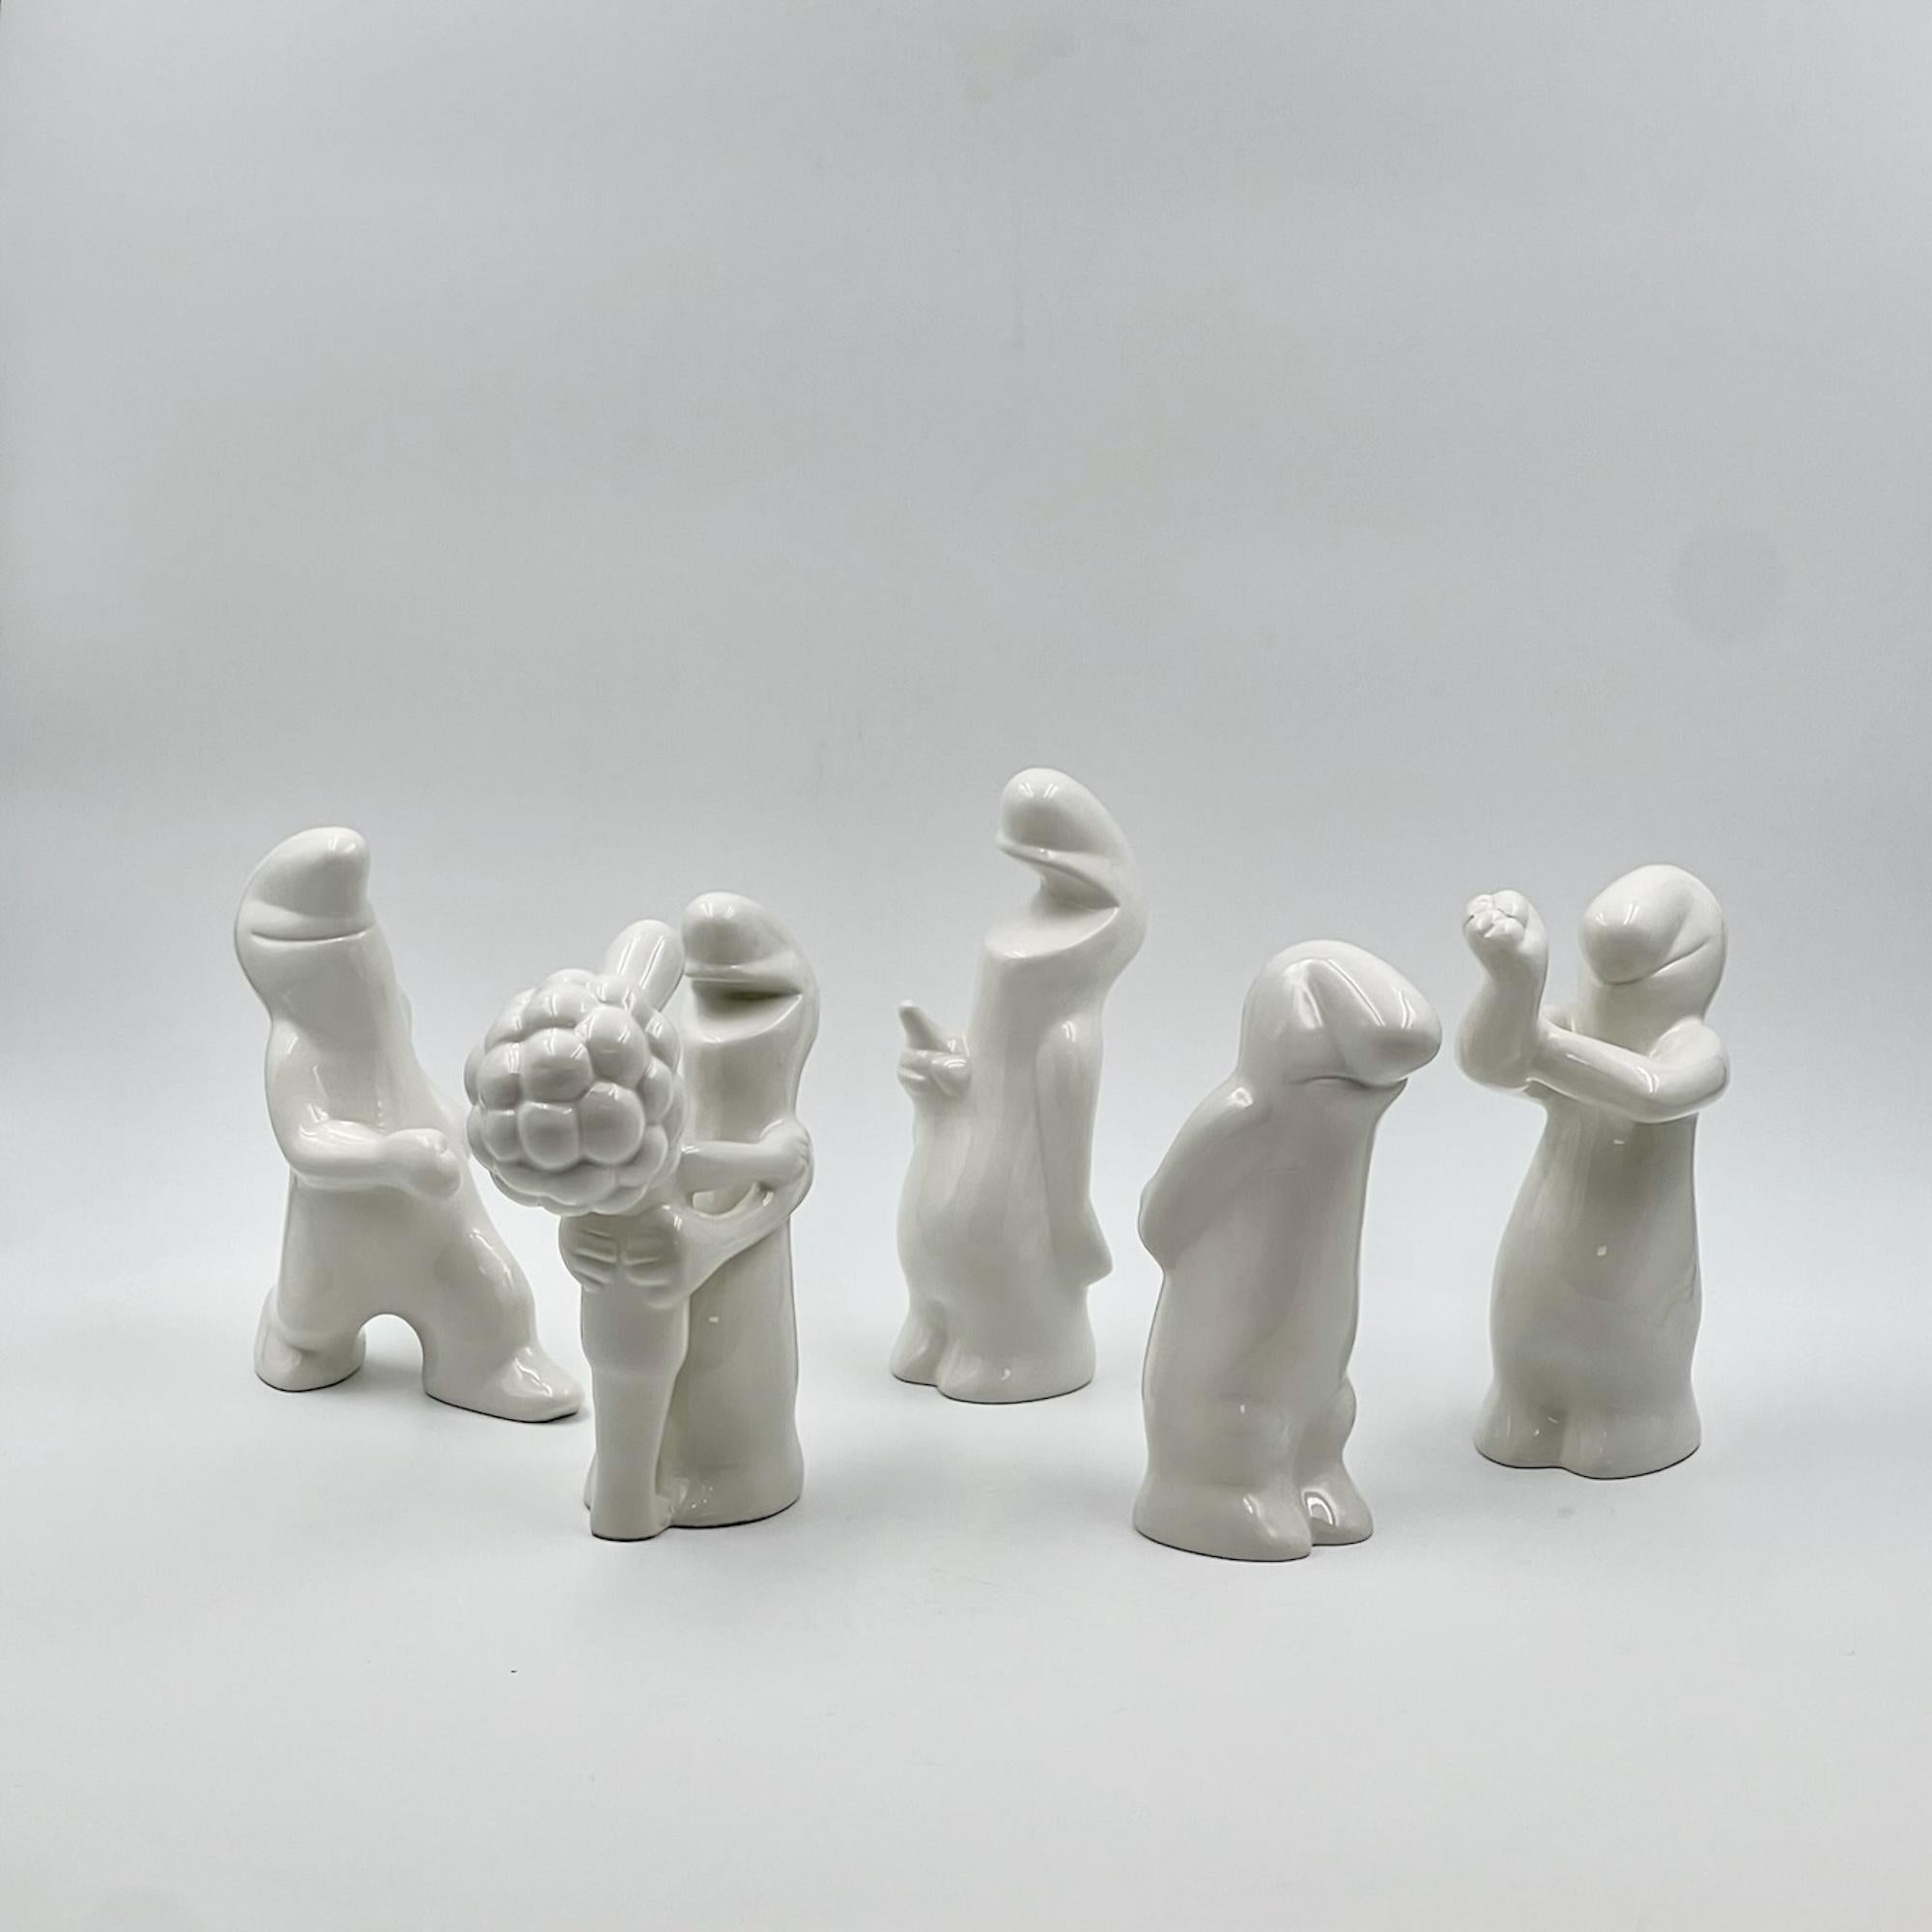 Italian Ceramic Sculptures 'La Linea' by Osvaldo Cavandoli – Vintage Full Series 1960s For Sale